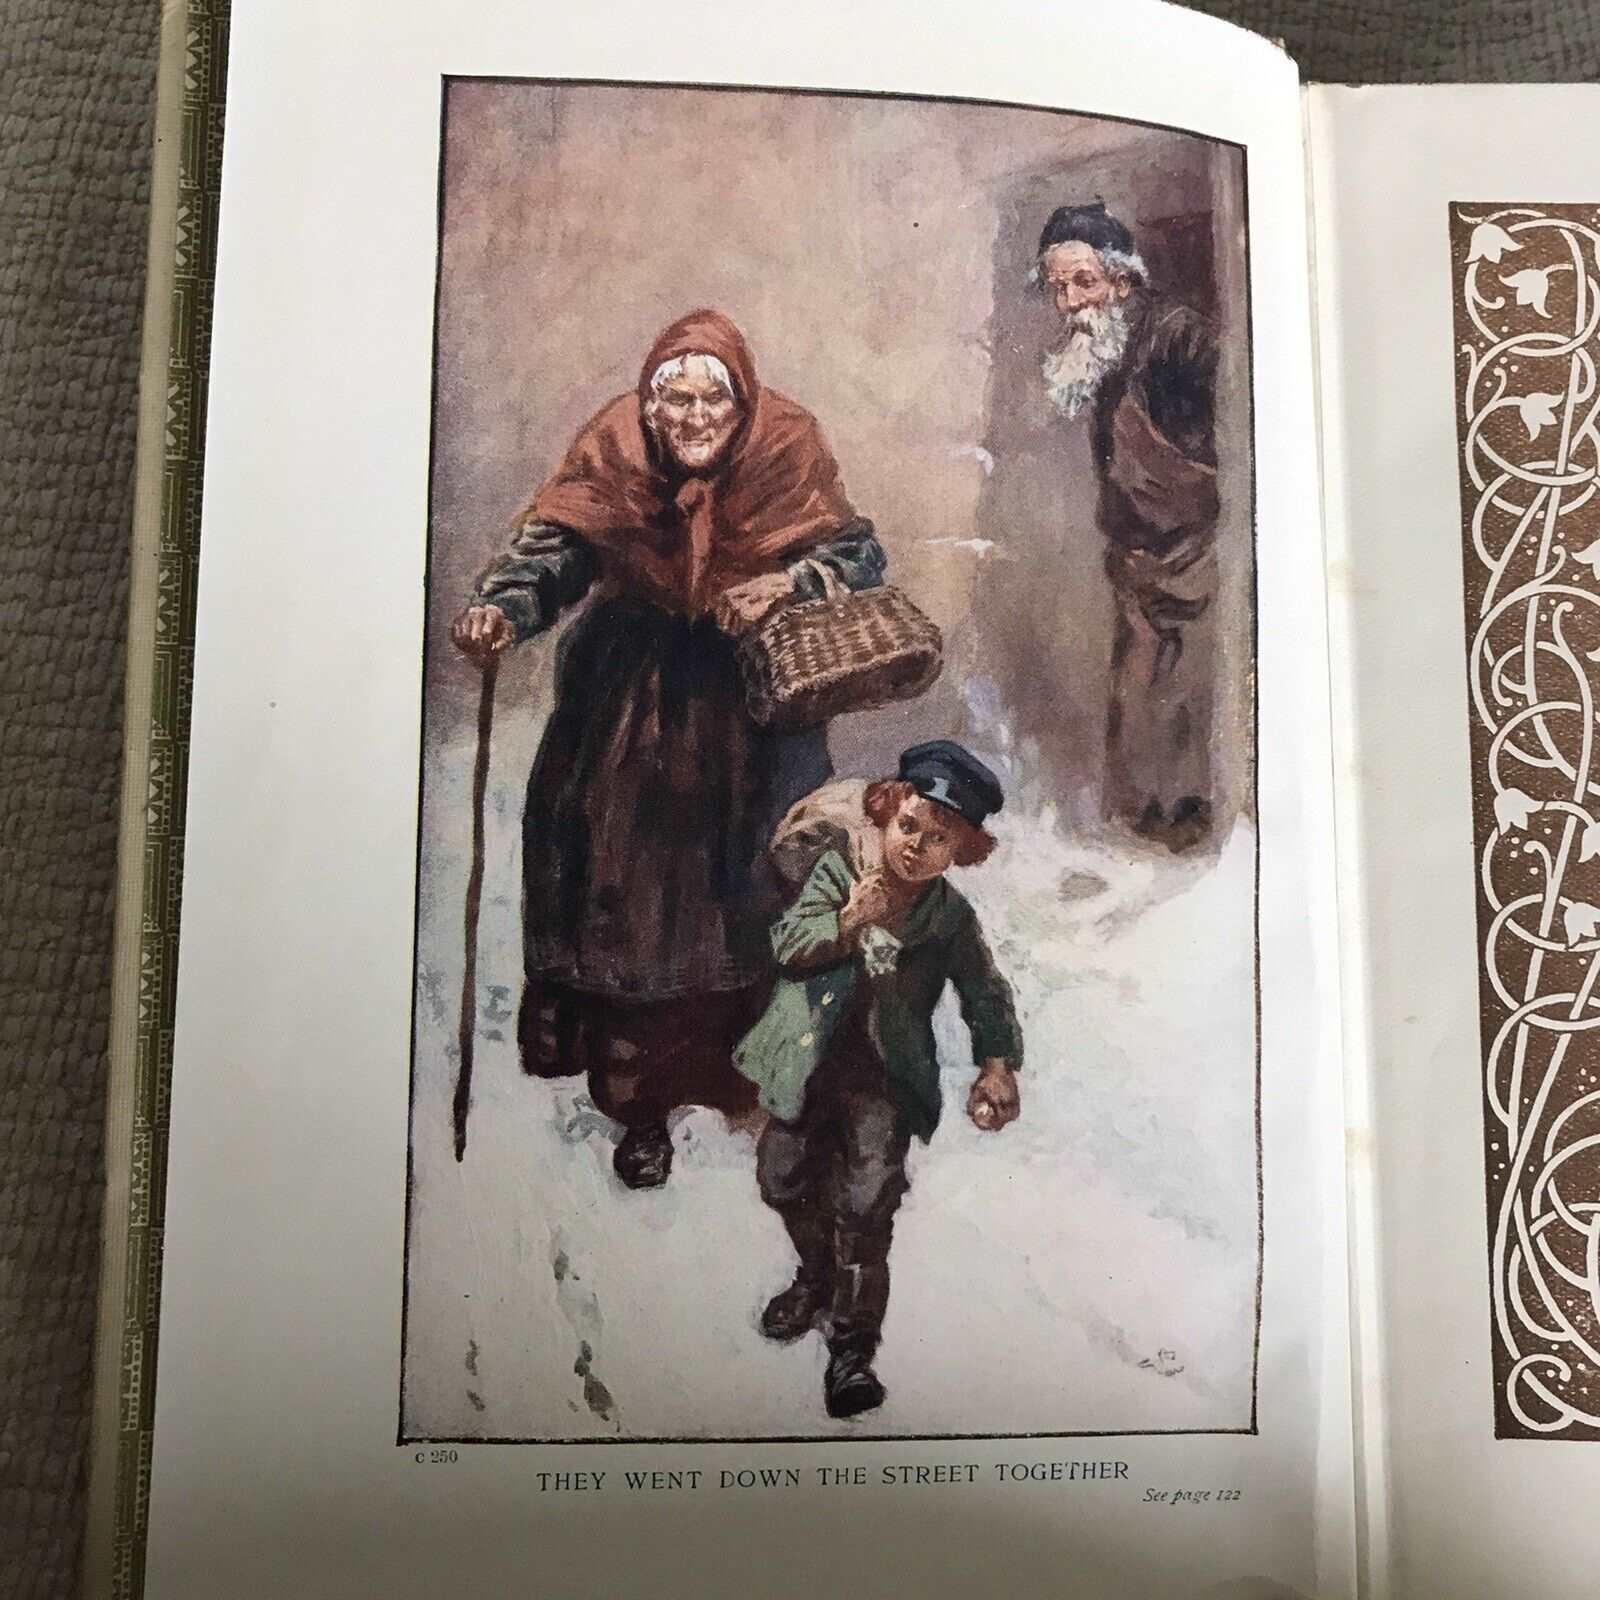 1913 The Gold Thread - Norman Macleod & Martin The Cobbler - Leo Tolstoy Honeyburn Books (UK)